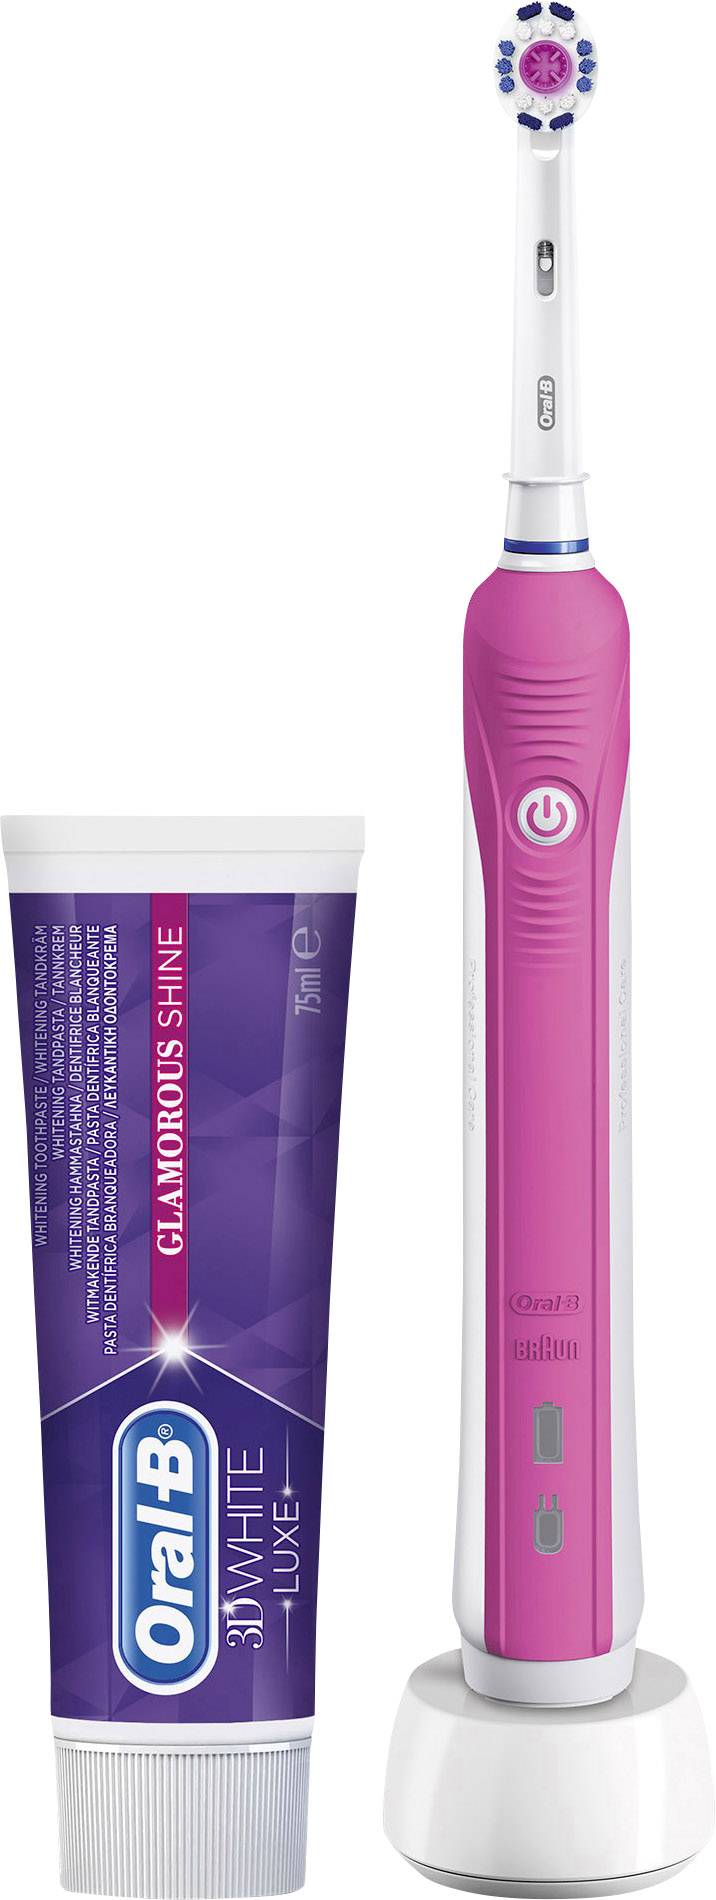 Pro 750 ZP Pro 750 Electric toothbrush Rotating/vibrating/pulsating Pink, White | Conrad.com